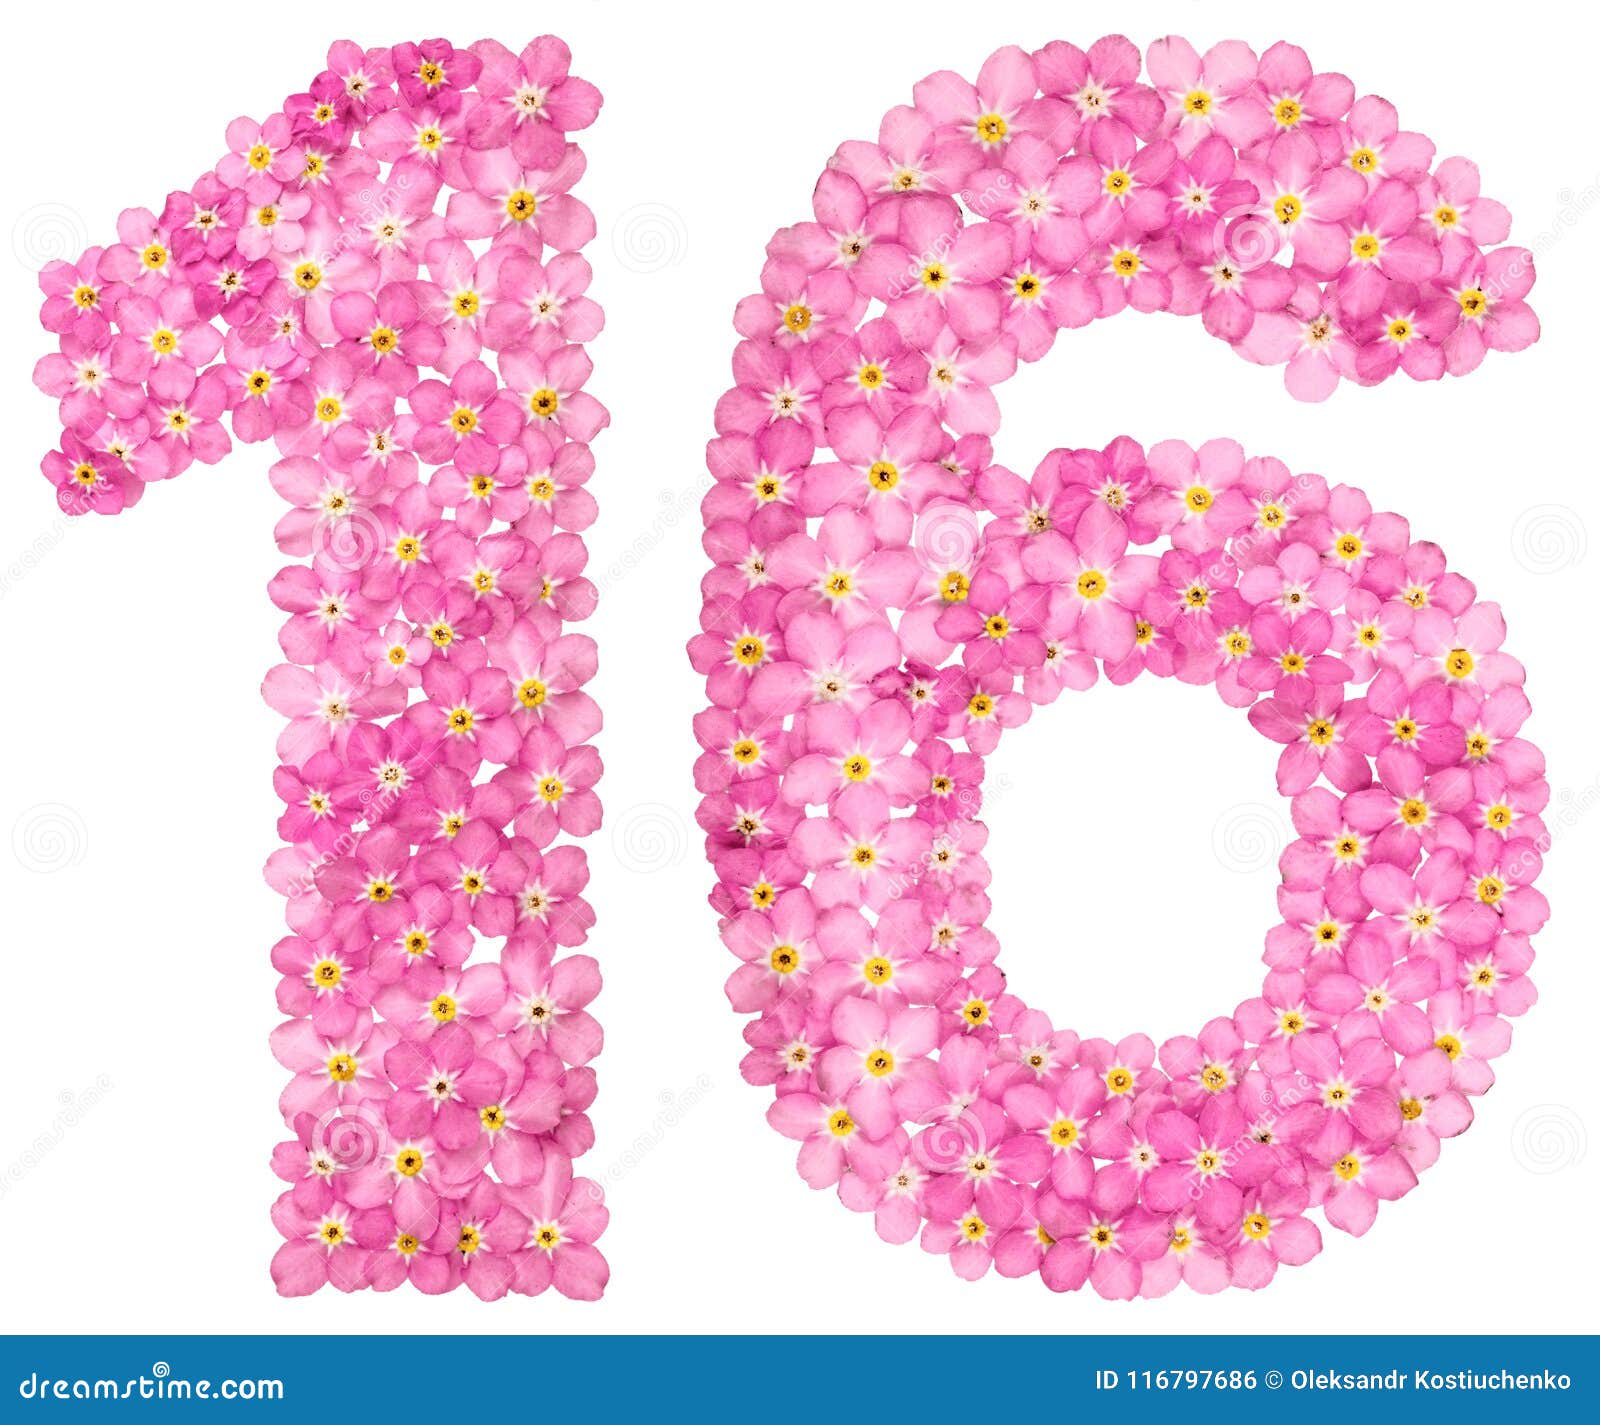 Шестнадцать буквами. Цифра 16 красивая. Цифра 16 из цветов. Розовые цифры. На фоне цифра 16.